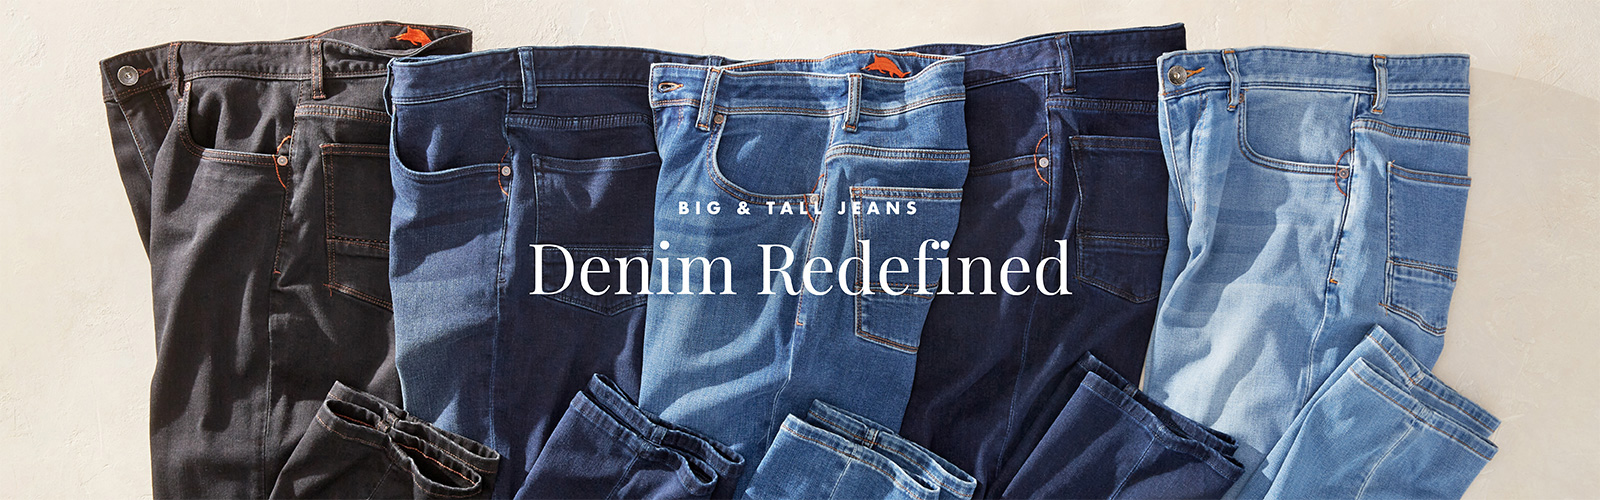 Big & tall Jeans - Denim Redefined